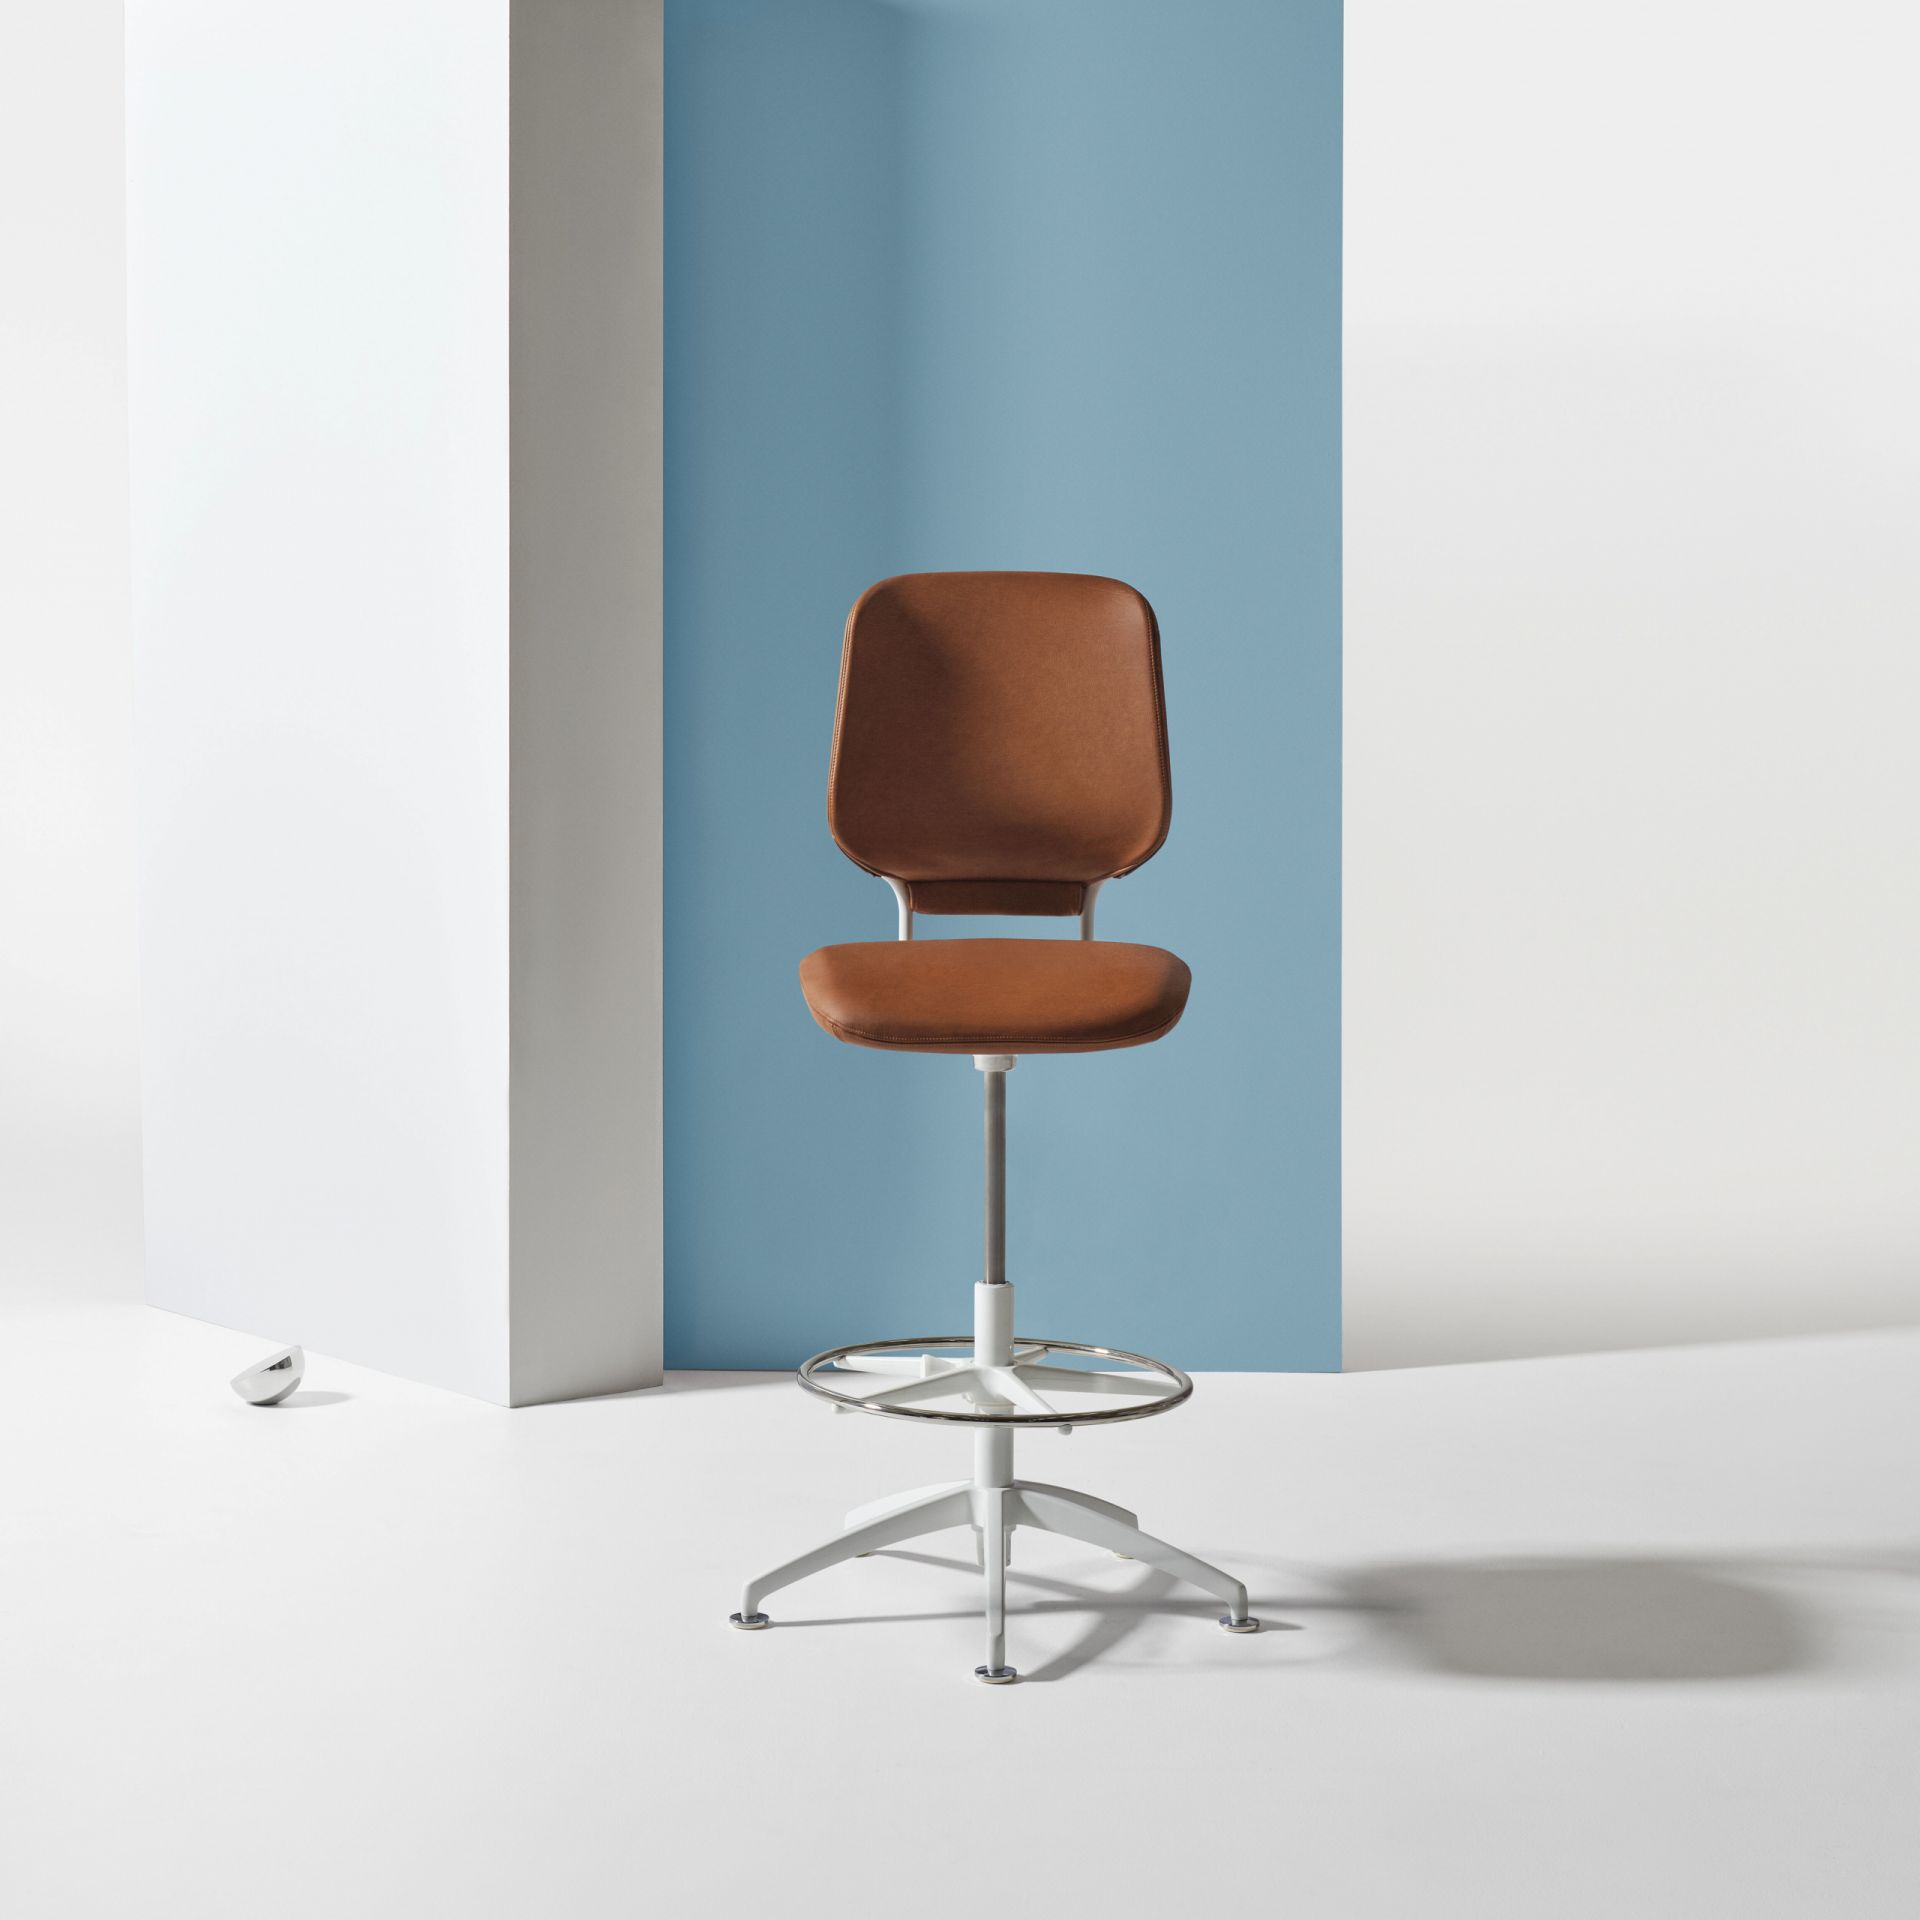 Savo Invite Invite høy stol product image 1